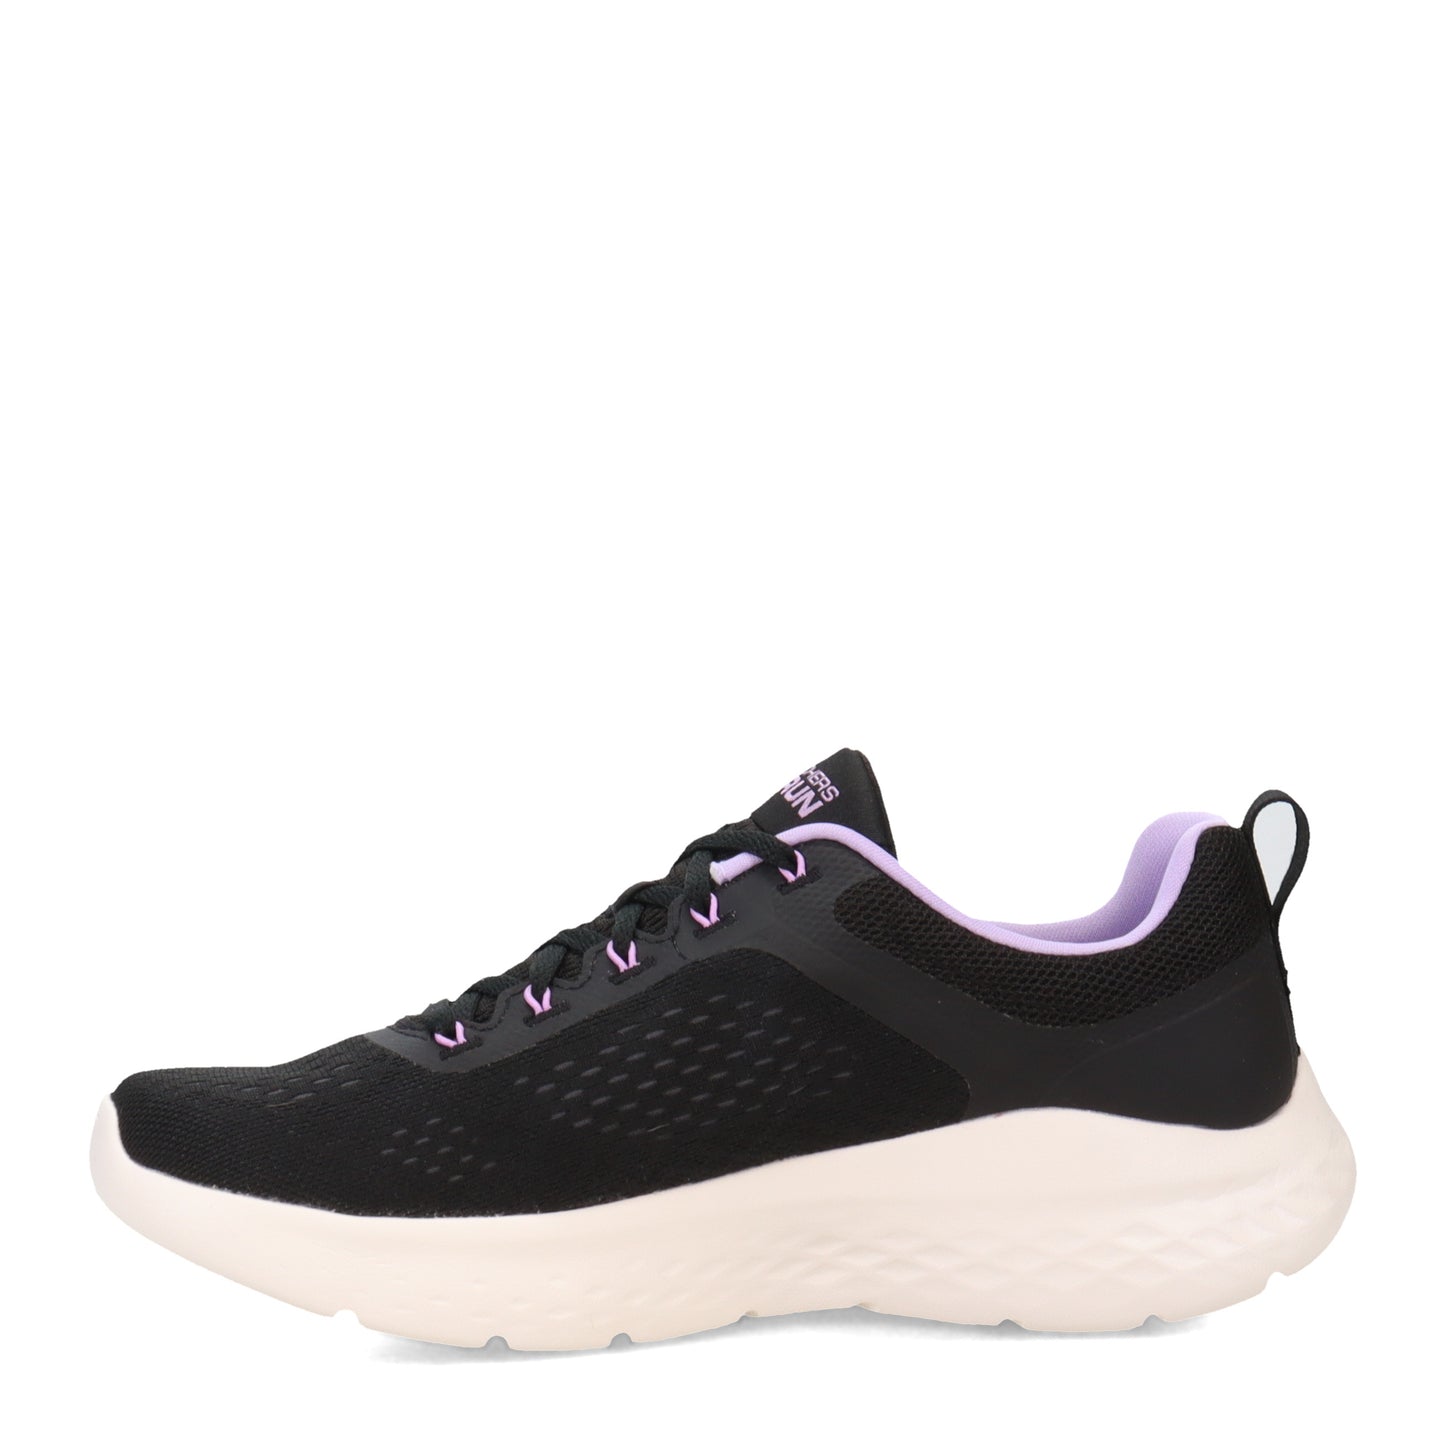 Peltz Shoes  Women's Skechers GO RUN Lite Running Shoe BLACK WHITE PURPLE 129423-BKPR